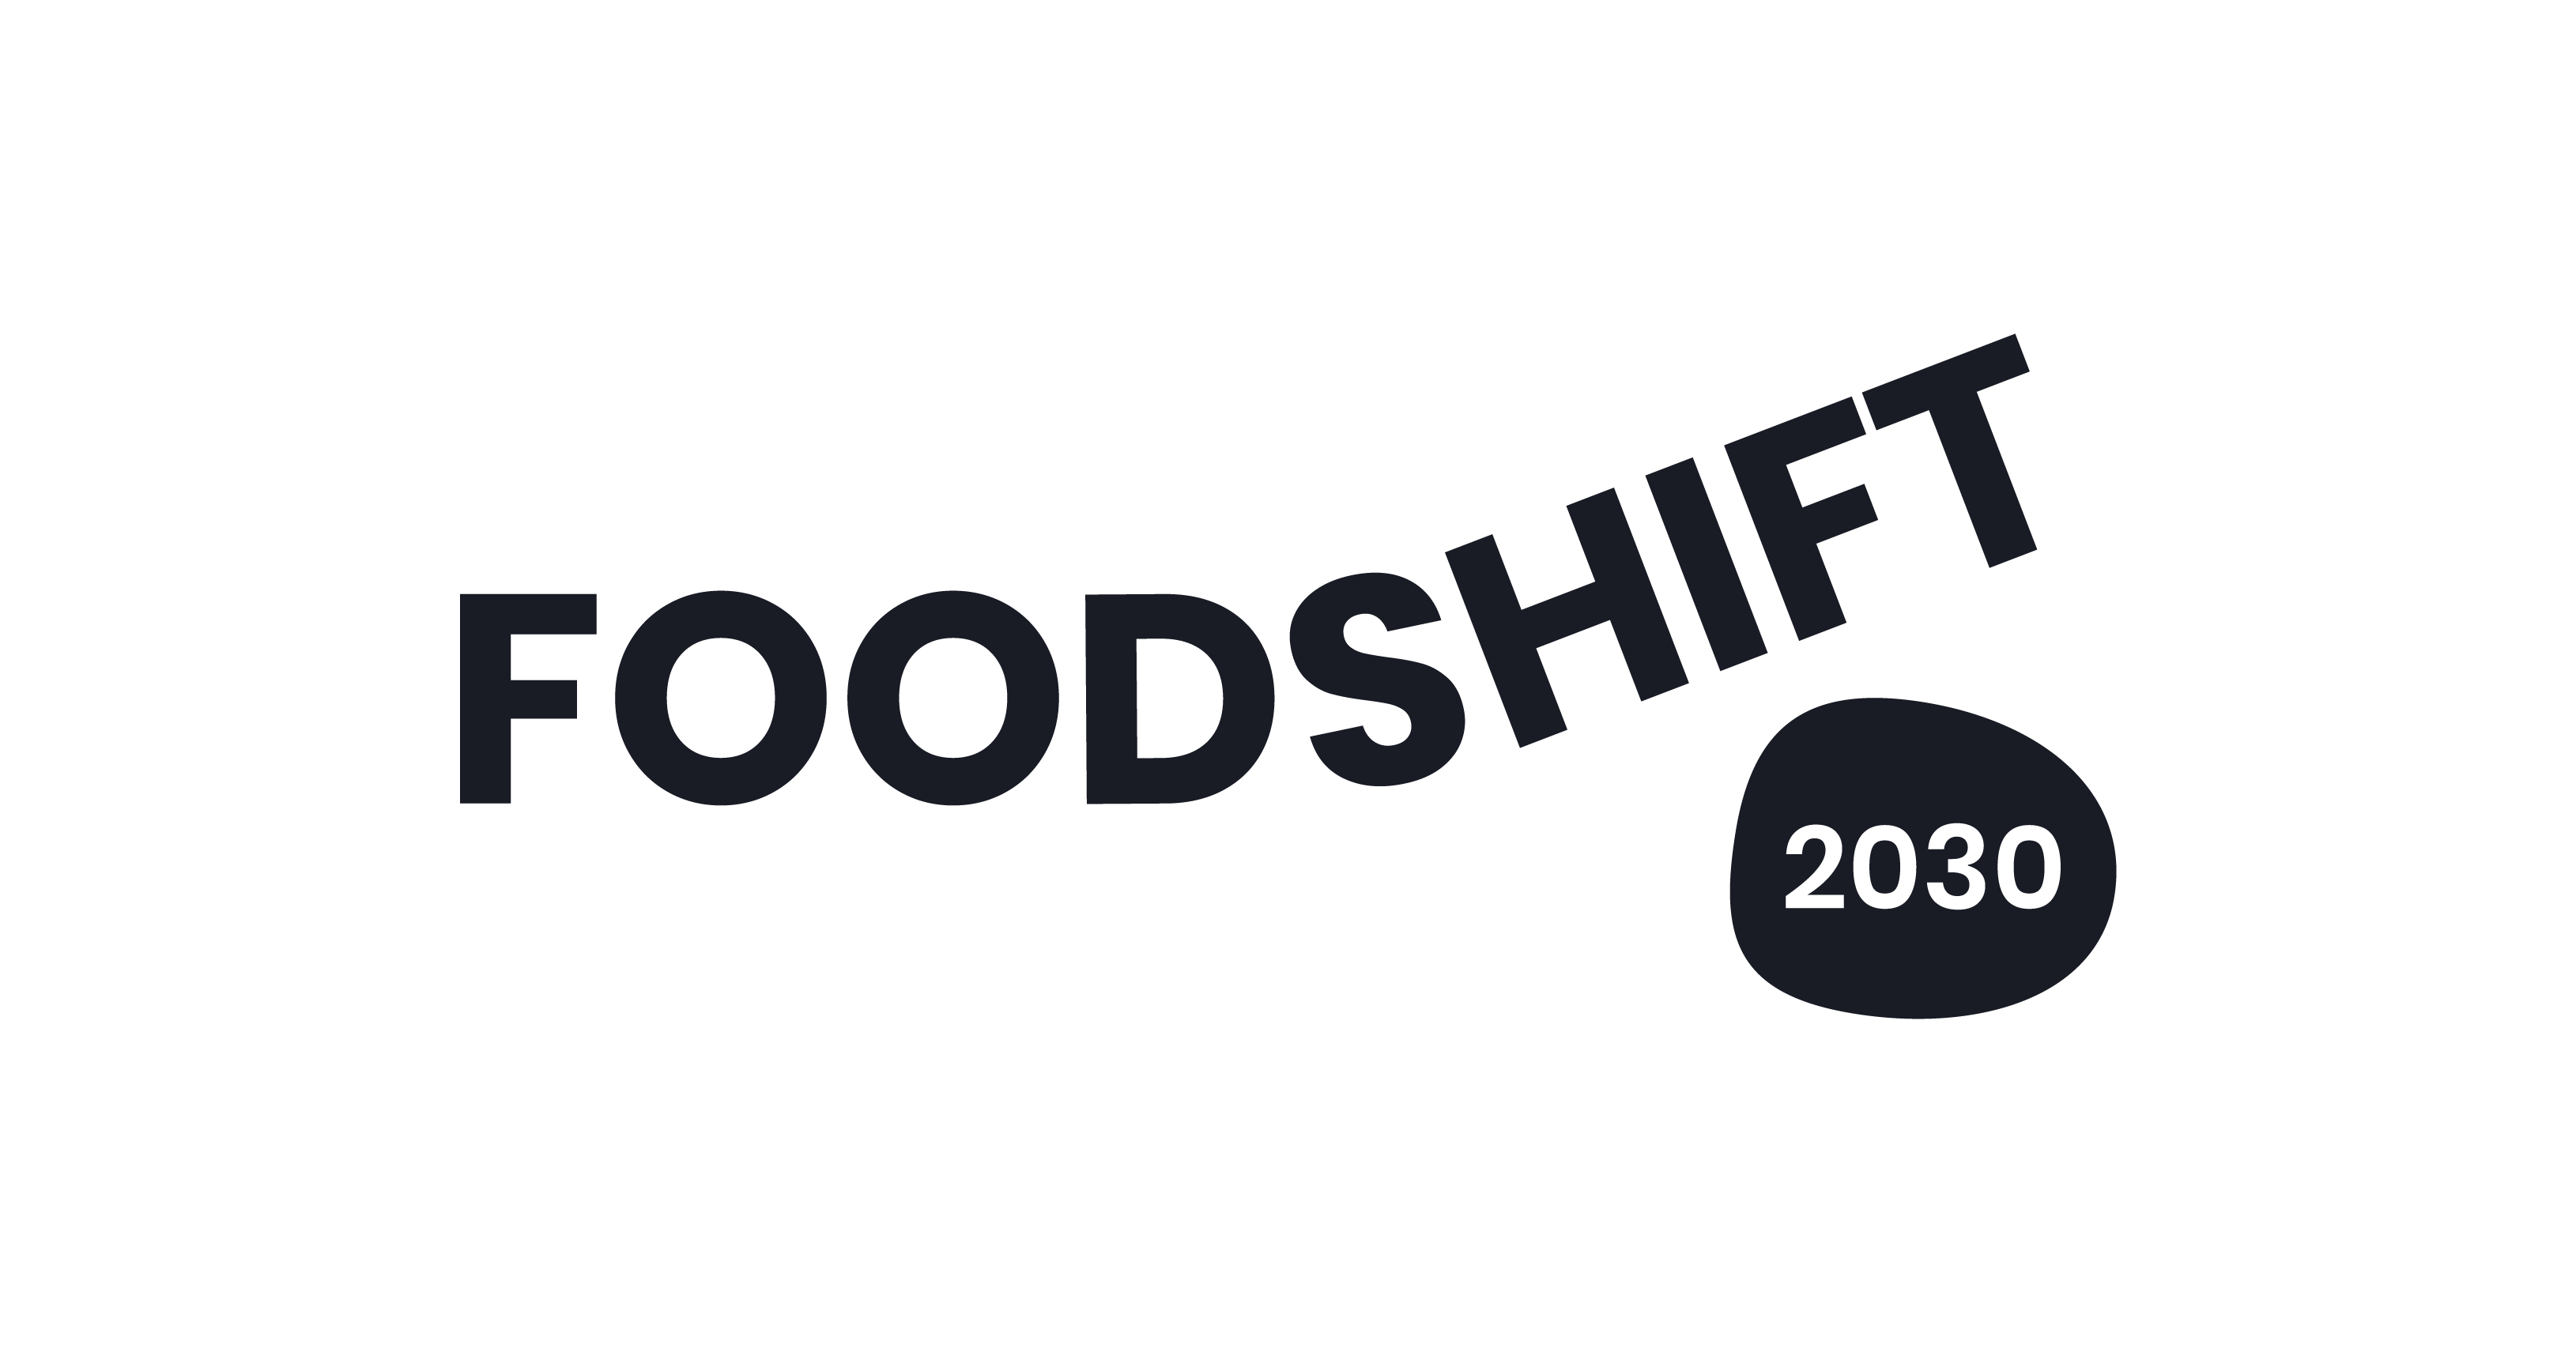 FoodSHIFT2030, EU Horizon 2020 project. Credit: FoodSHIFT 2030